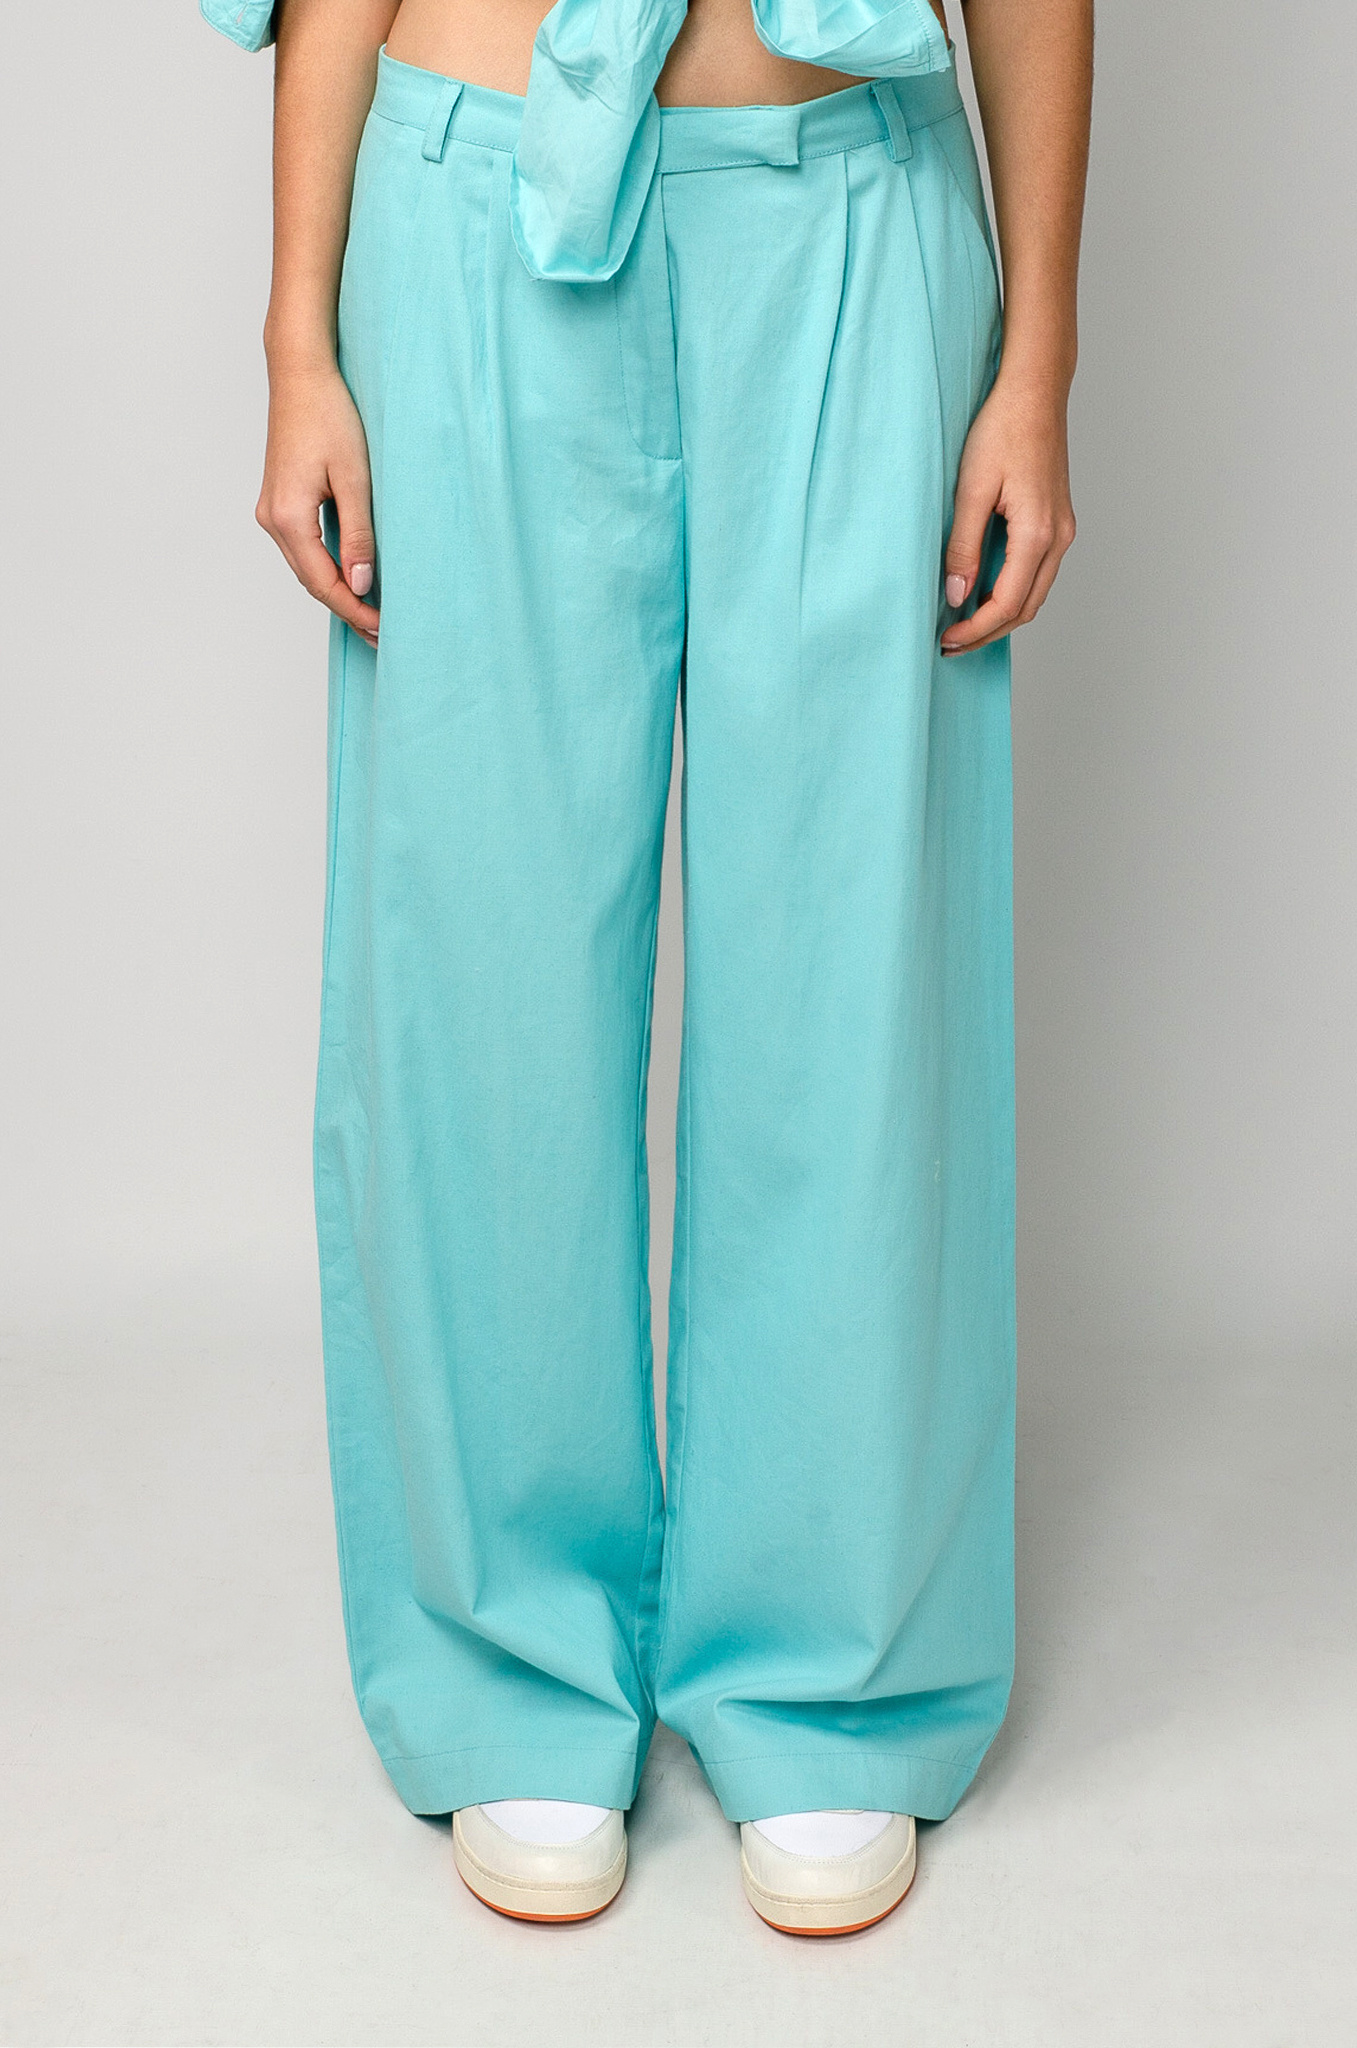 Marley Pants Turquoise-3